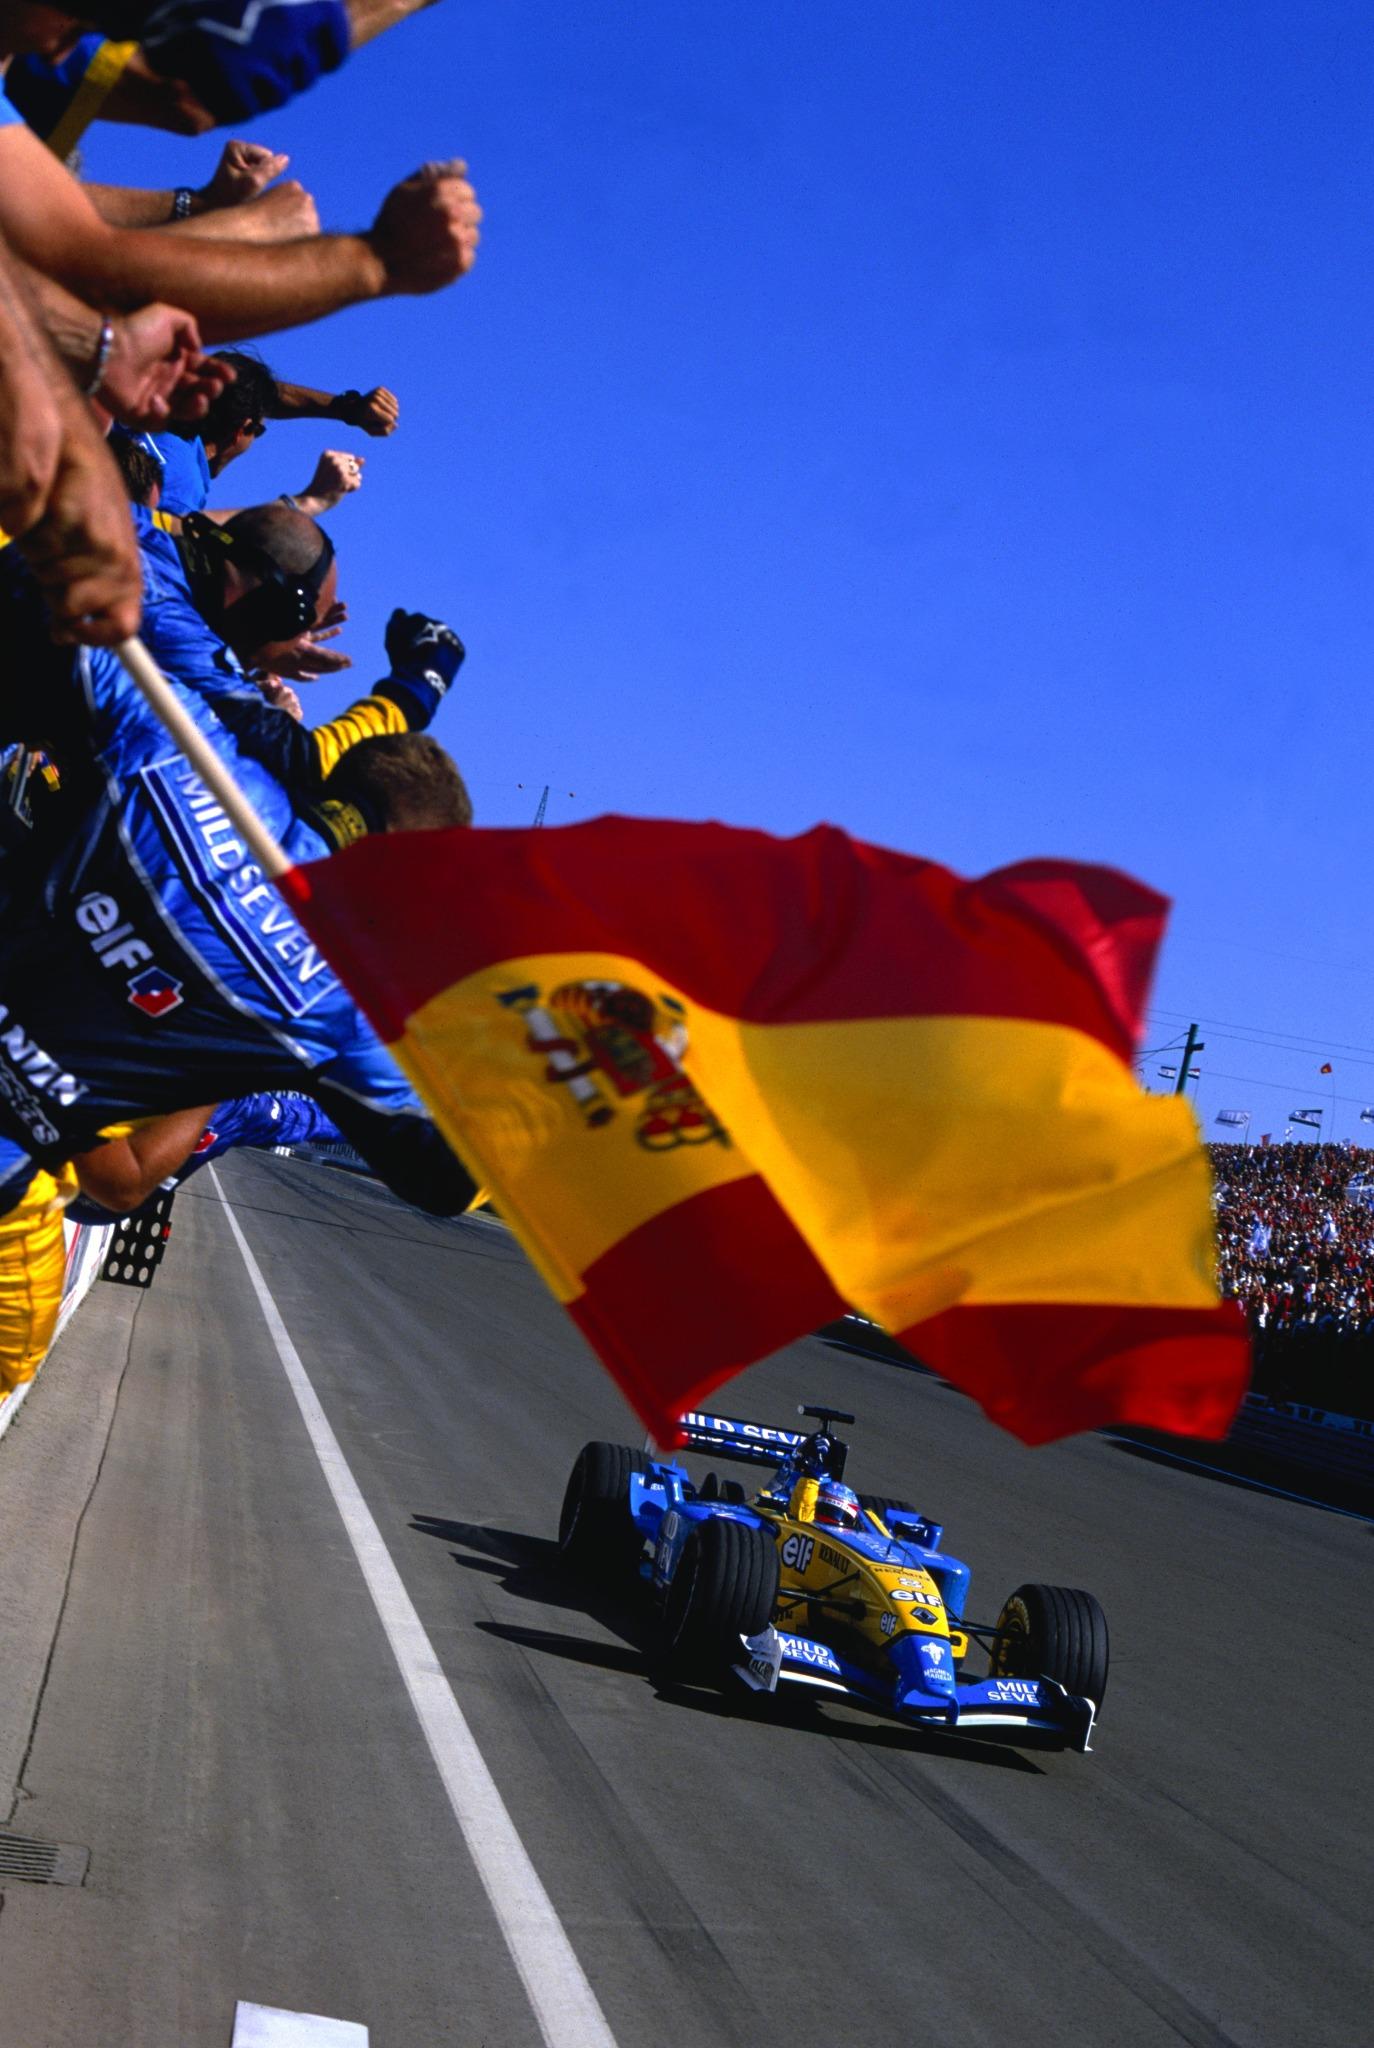 Fernando Alonso Makes Renault F1 Team Debut